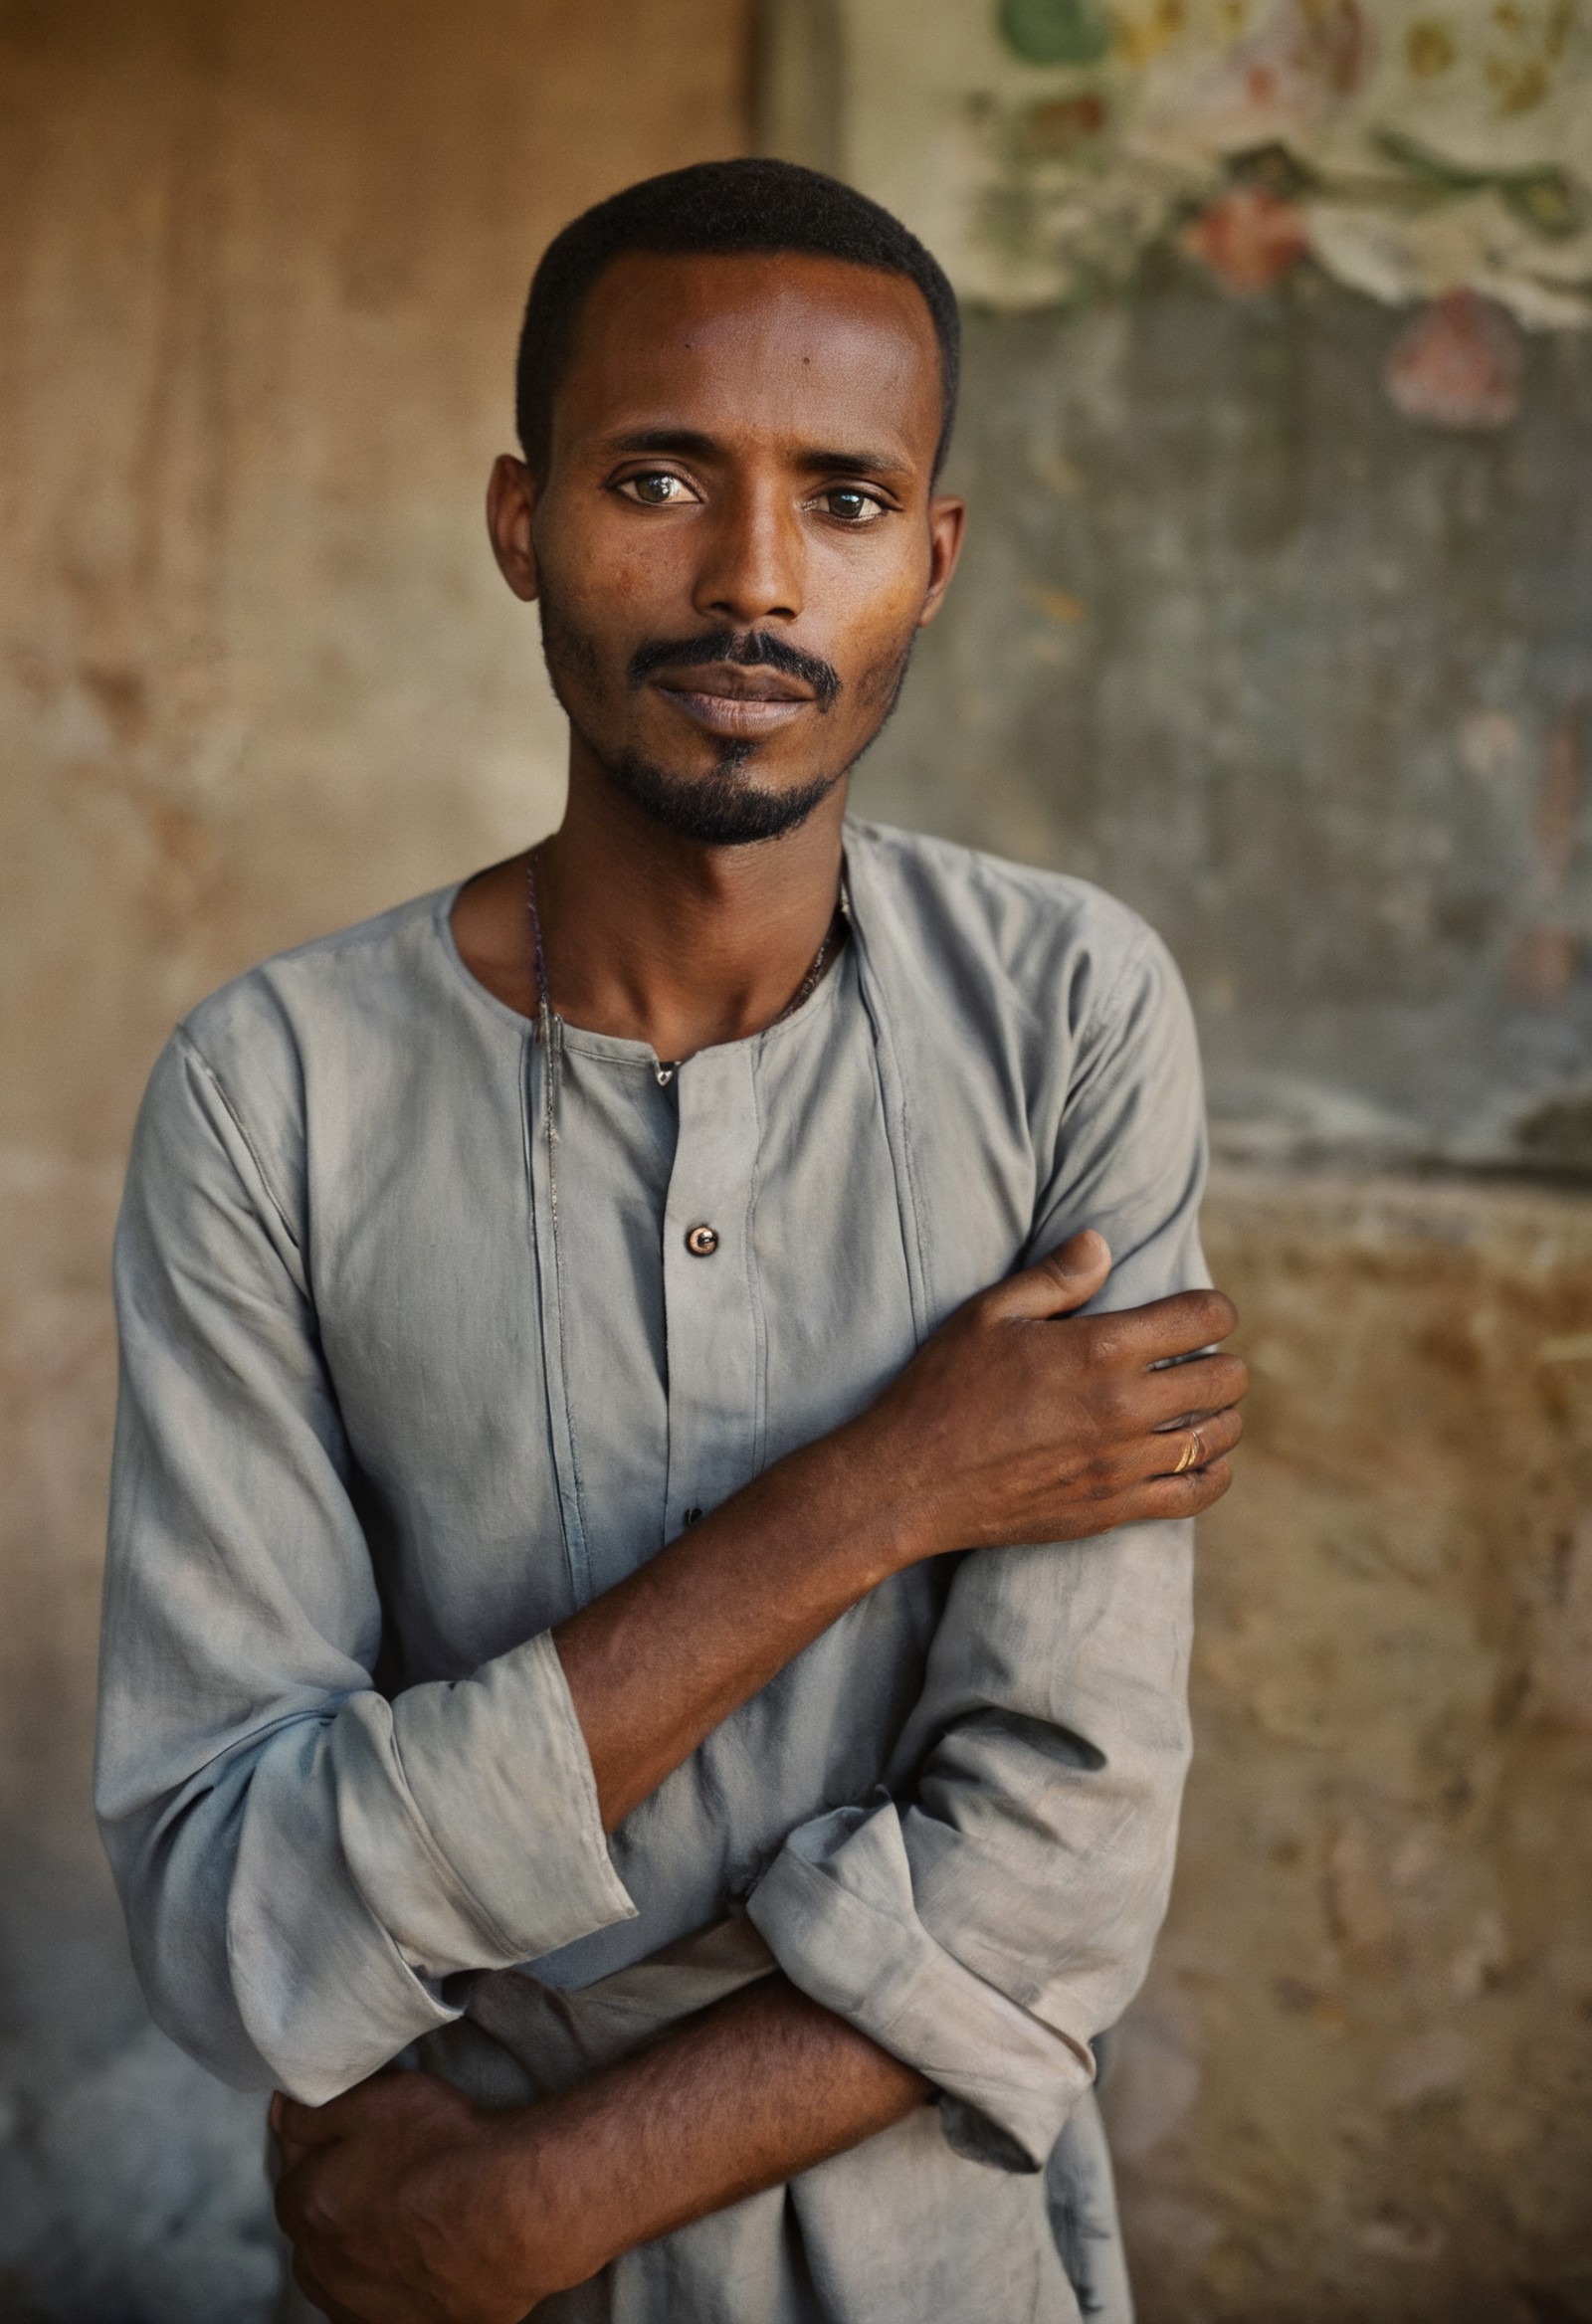 Photography in (stvmccrr style), a Somalian male, analog film, film grain, kodachrome, rich colors, emotive humane photogr...